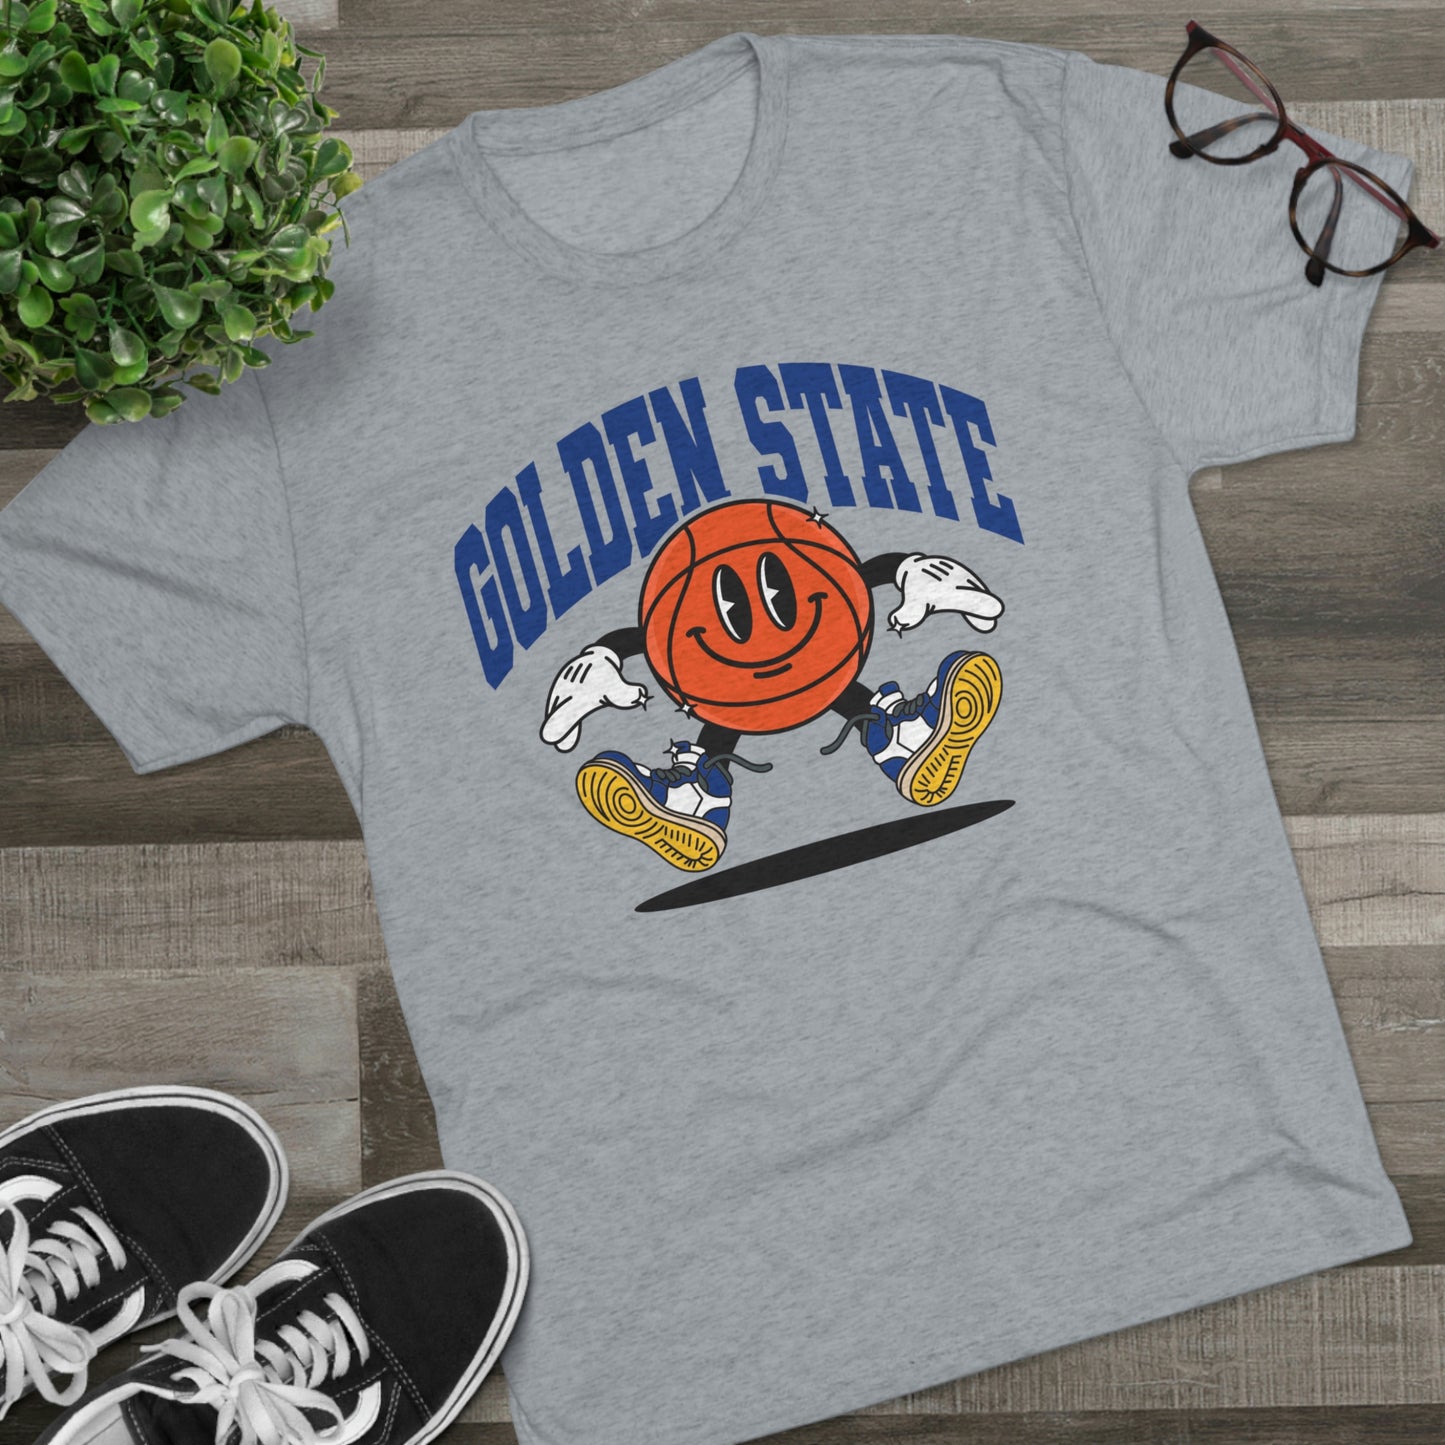 Golden State Basketball Tri-Blend Tee